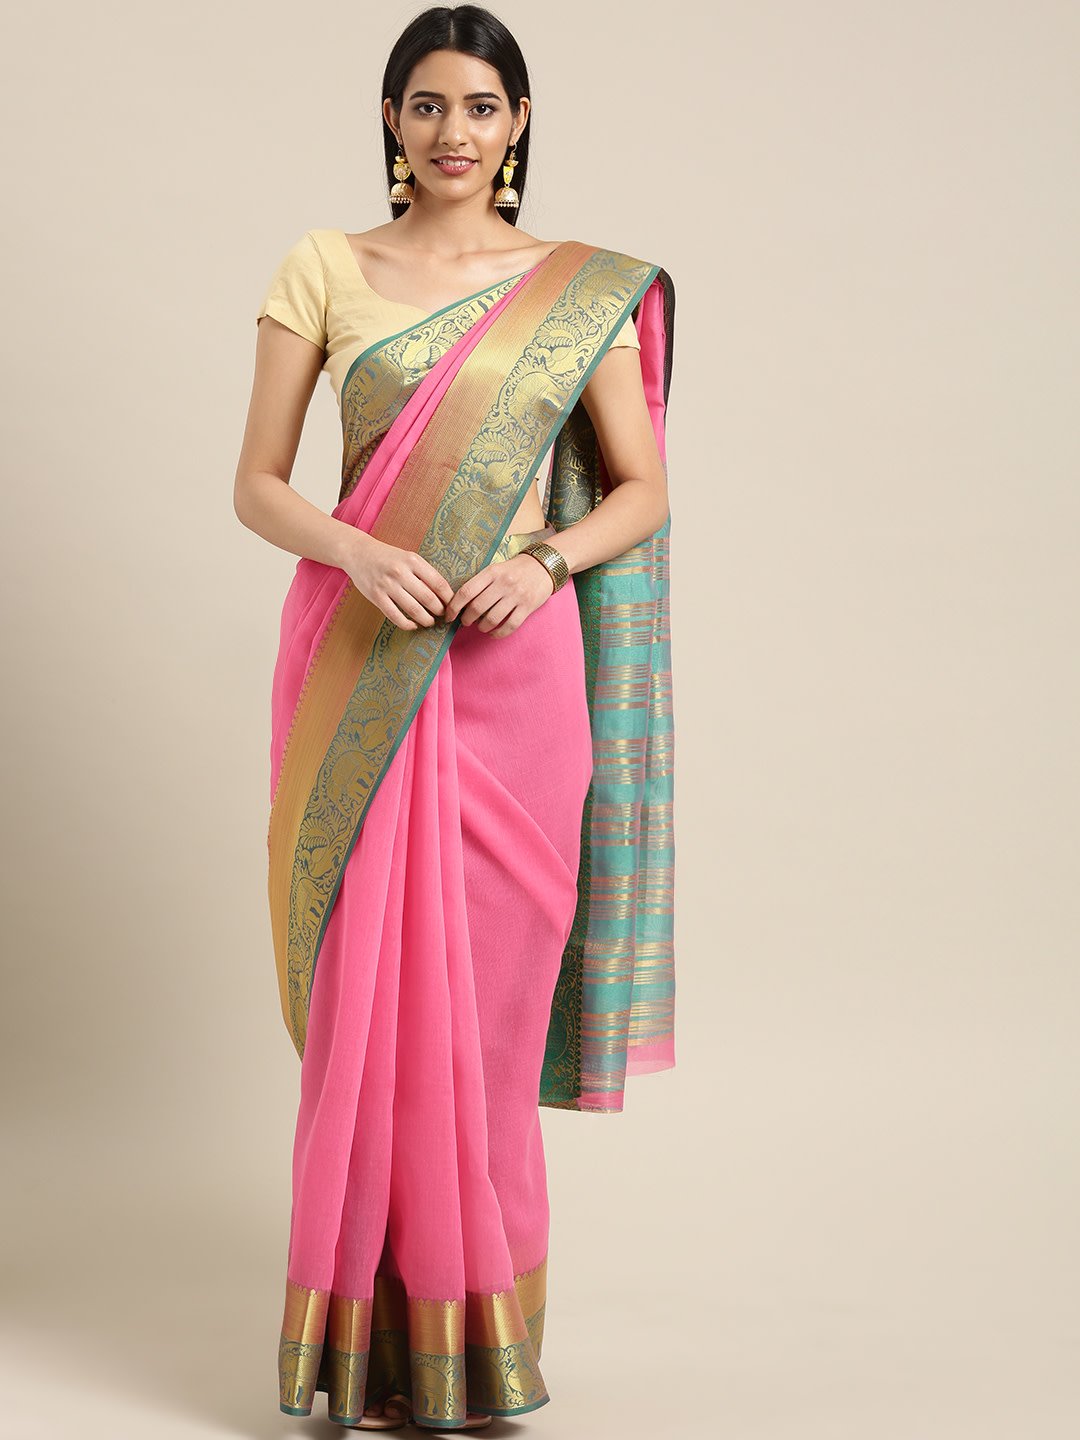 Ishin Chanderi Cotton Pink Solid With Golden Zari Border Women's Saree/Sari